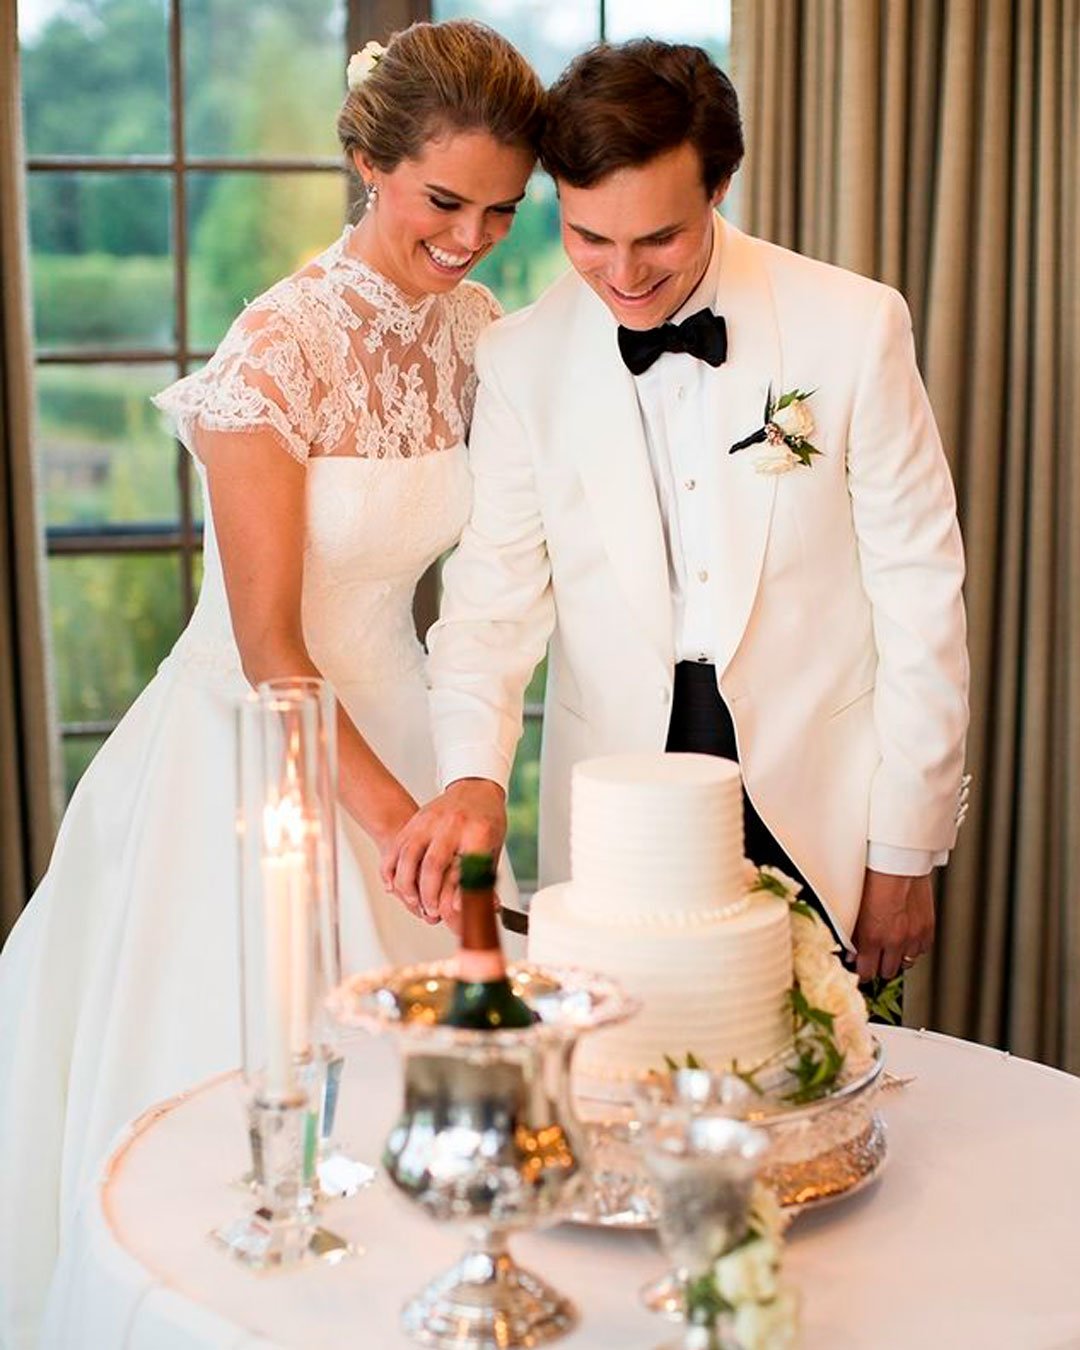 new wedding songs couple bride groom cake cutting